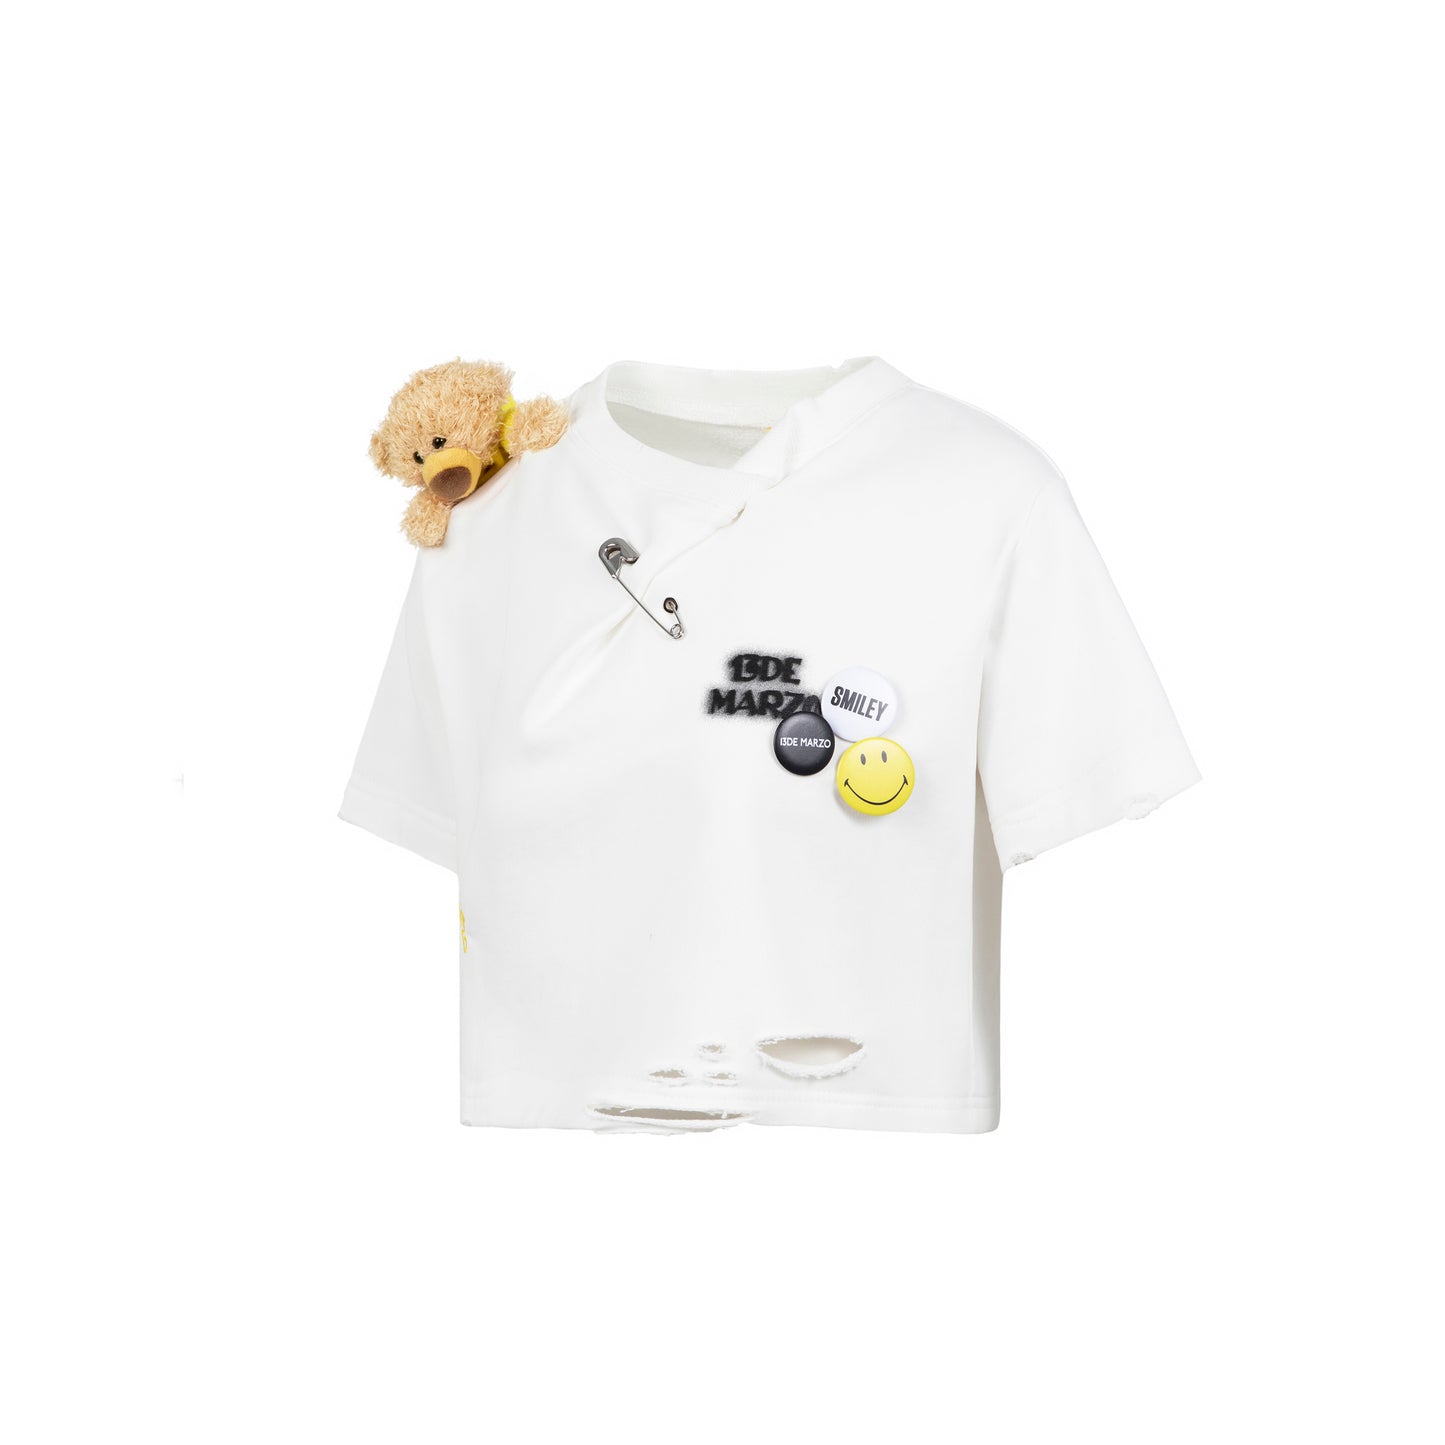 13DE MARZO Broken Pin Badge Bear Short T-shirt